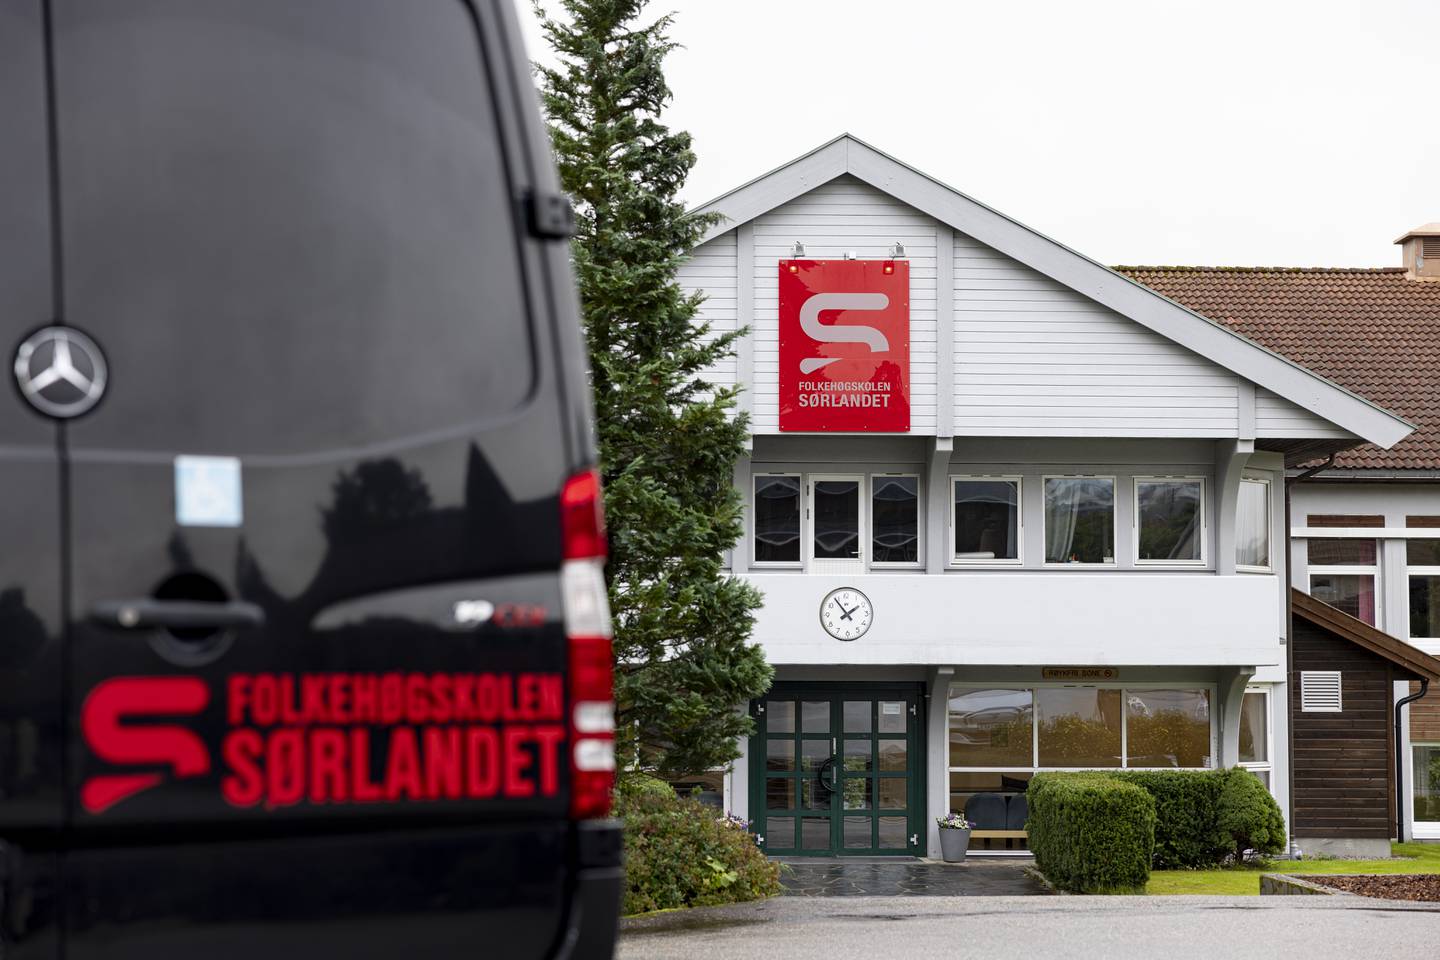 Folkehøgskolen Sørlandet